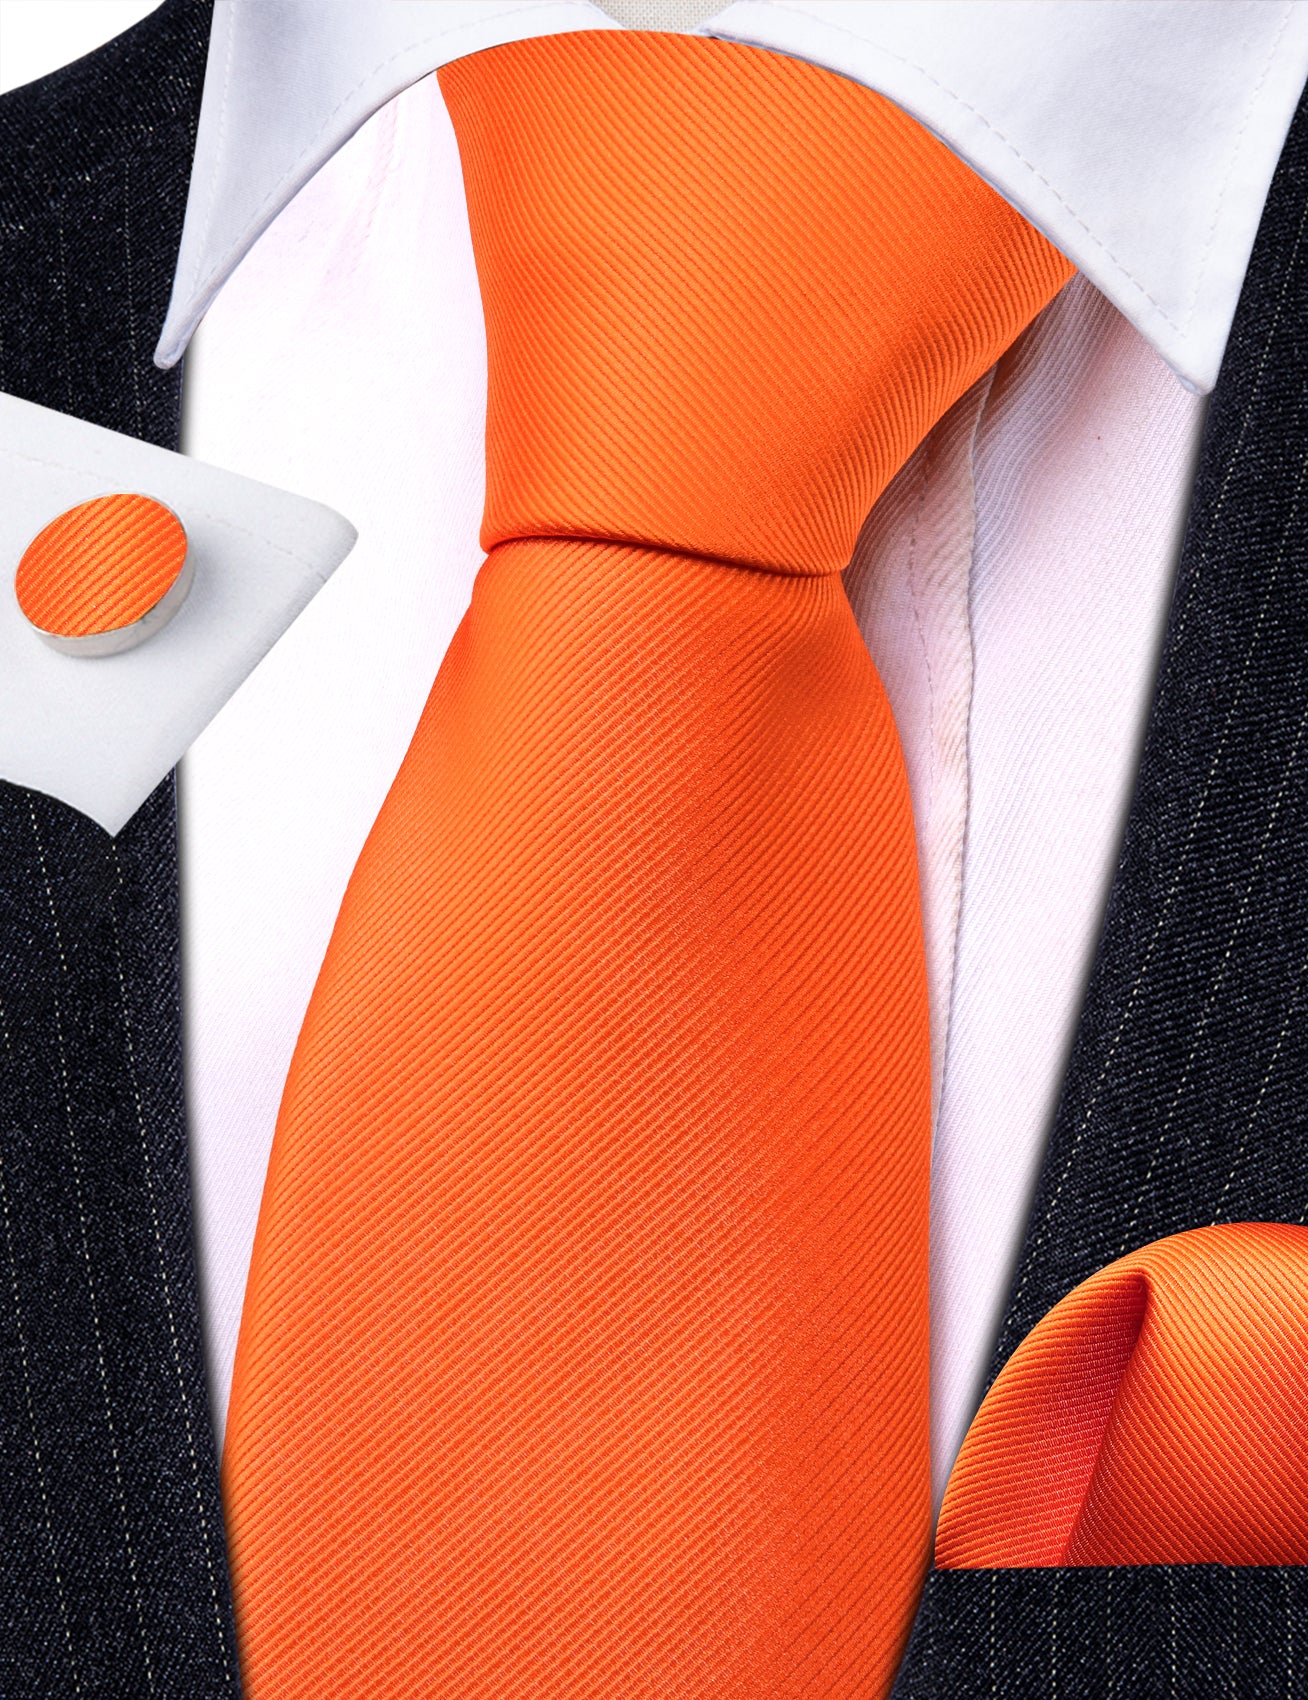 Barry.wang Orange Tie Woven Solid Silk Tie Pocket Square Cufflinks Set